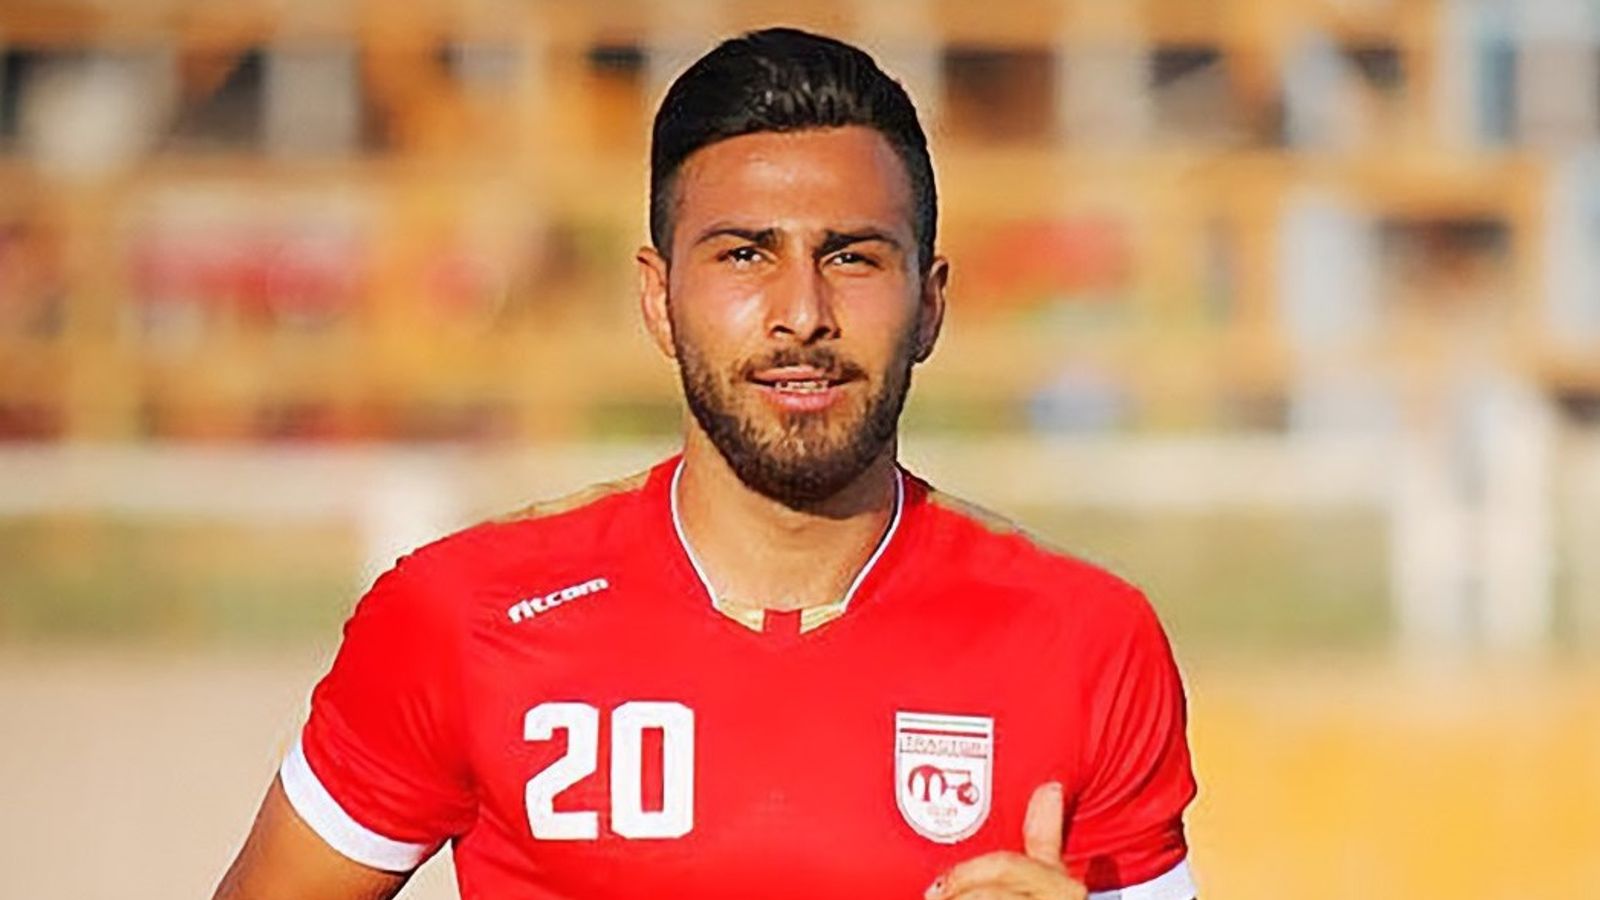 Amir Nasr-Azadani: Teammate of Iranian footballer facing death penalty speaks out